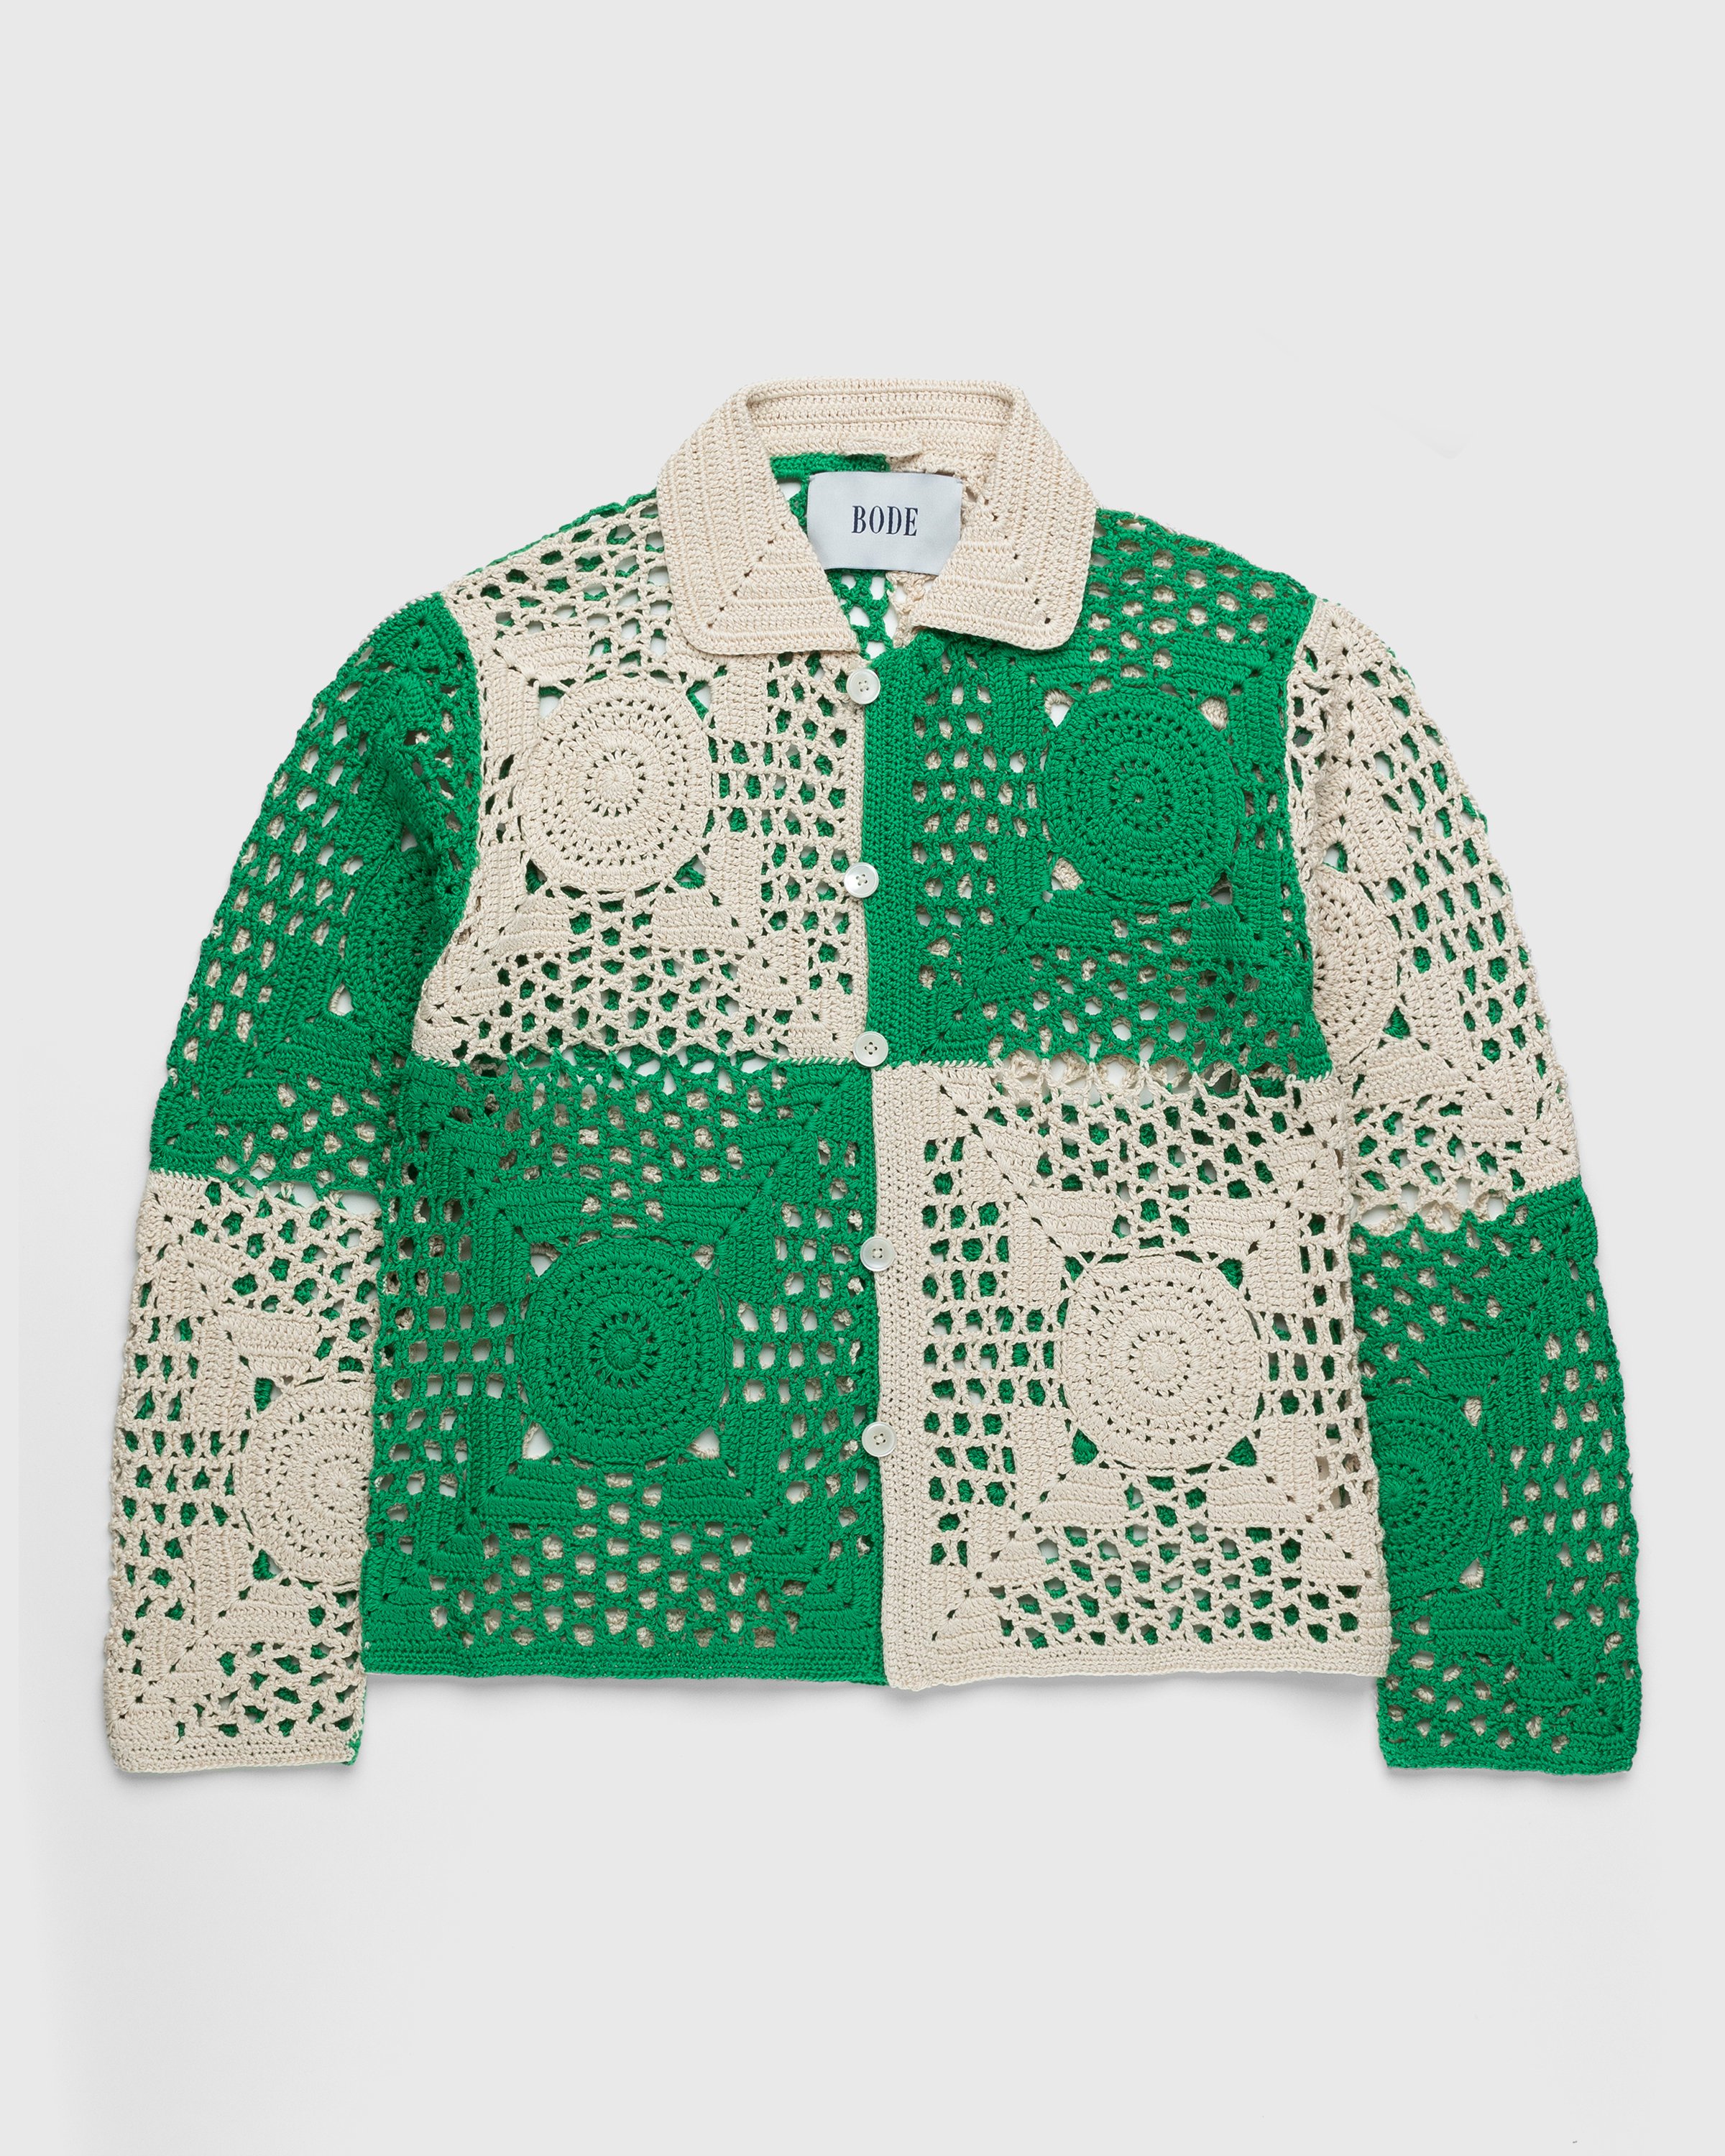 Bode – Duotone Crochet Overshirt Green | Highsnobiety Shop